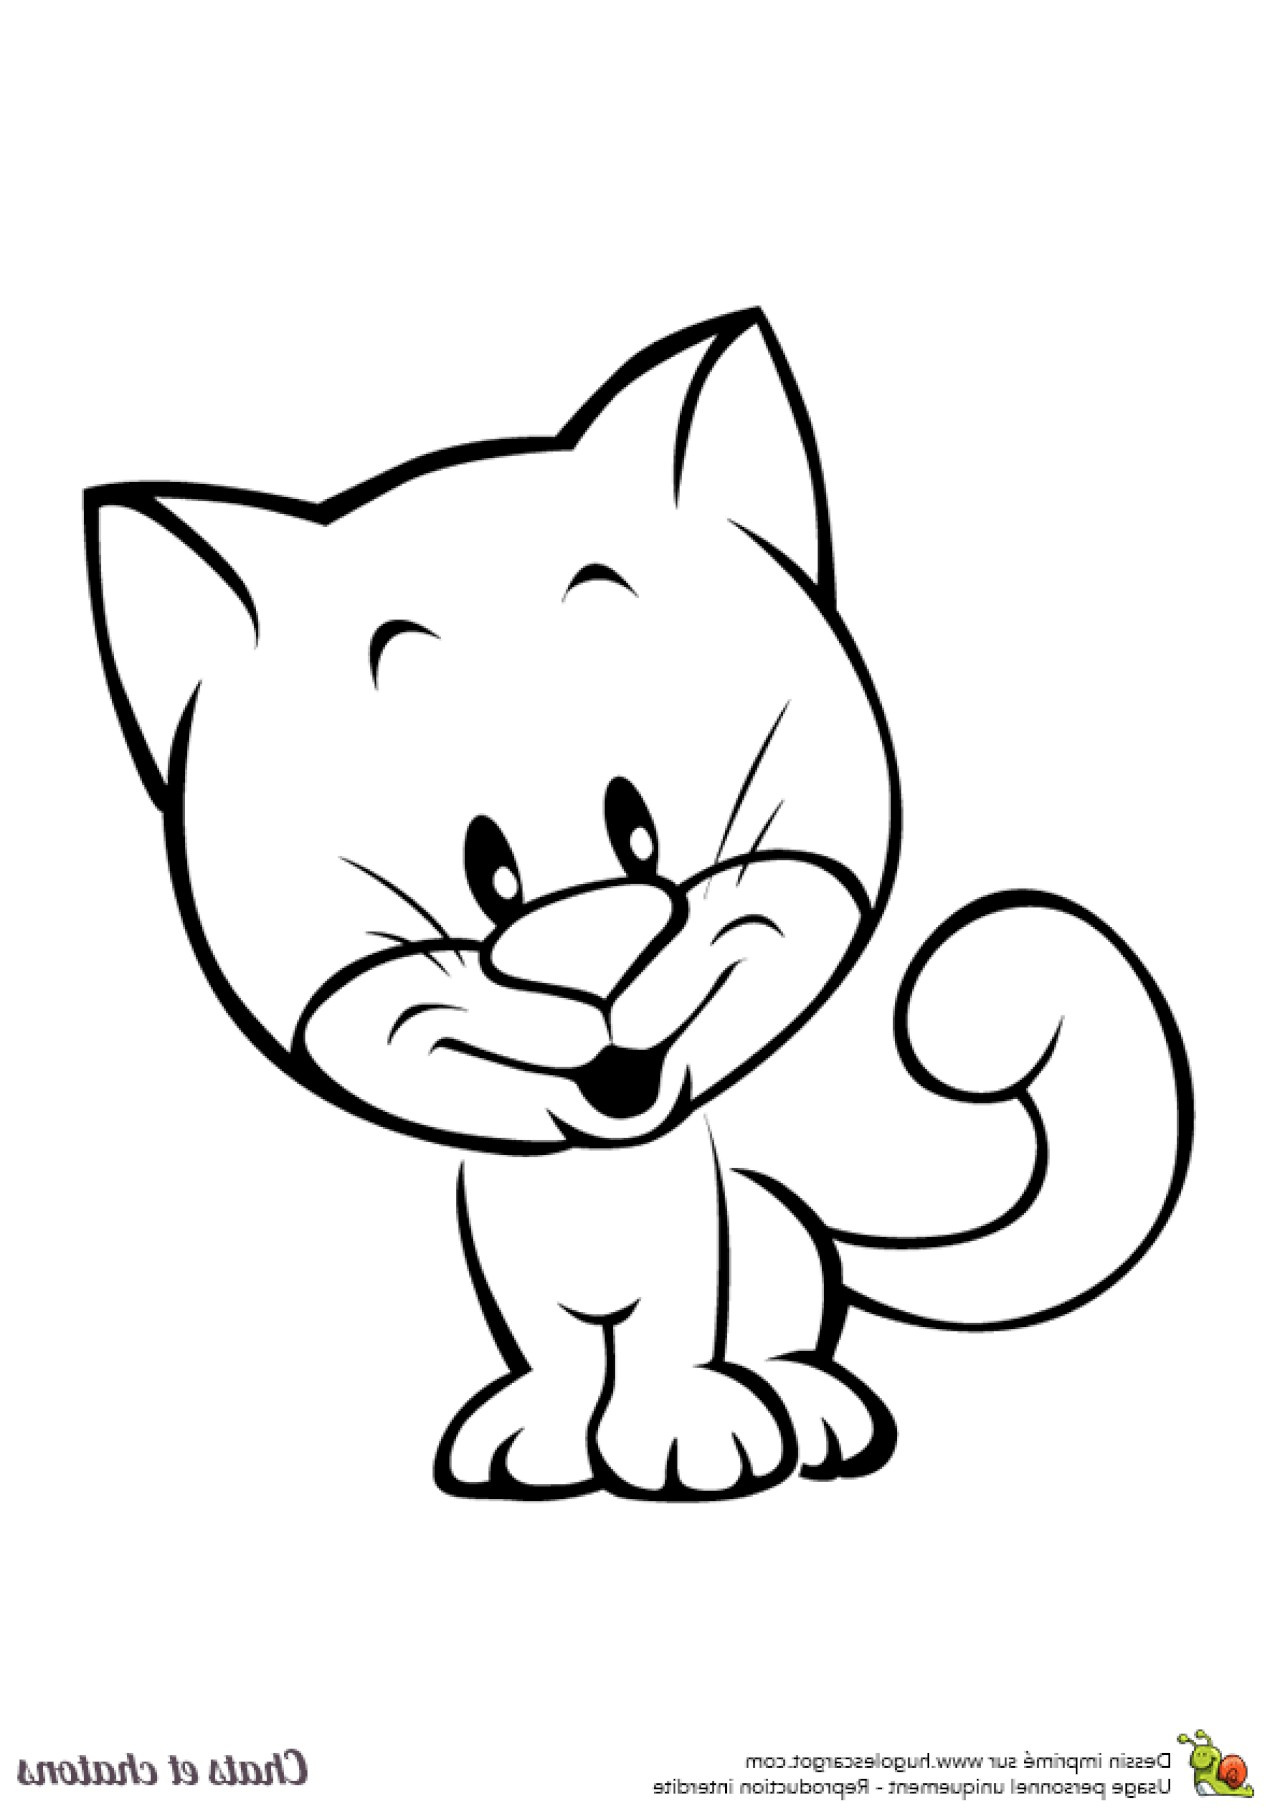 dessin manga facile ar52 jornalagora avec et dessin de chat facile a reproduire 34 1142x1590px dessin de chat facile a reproduire